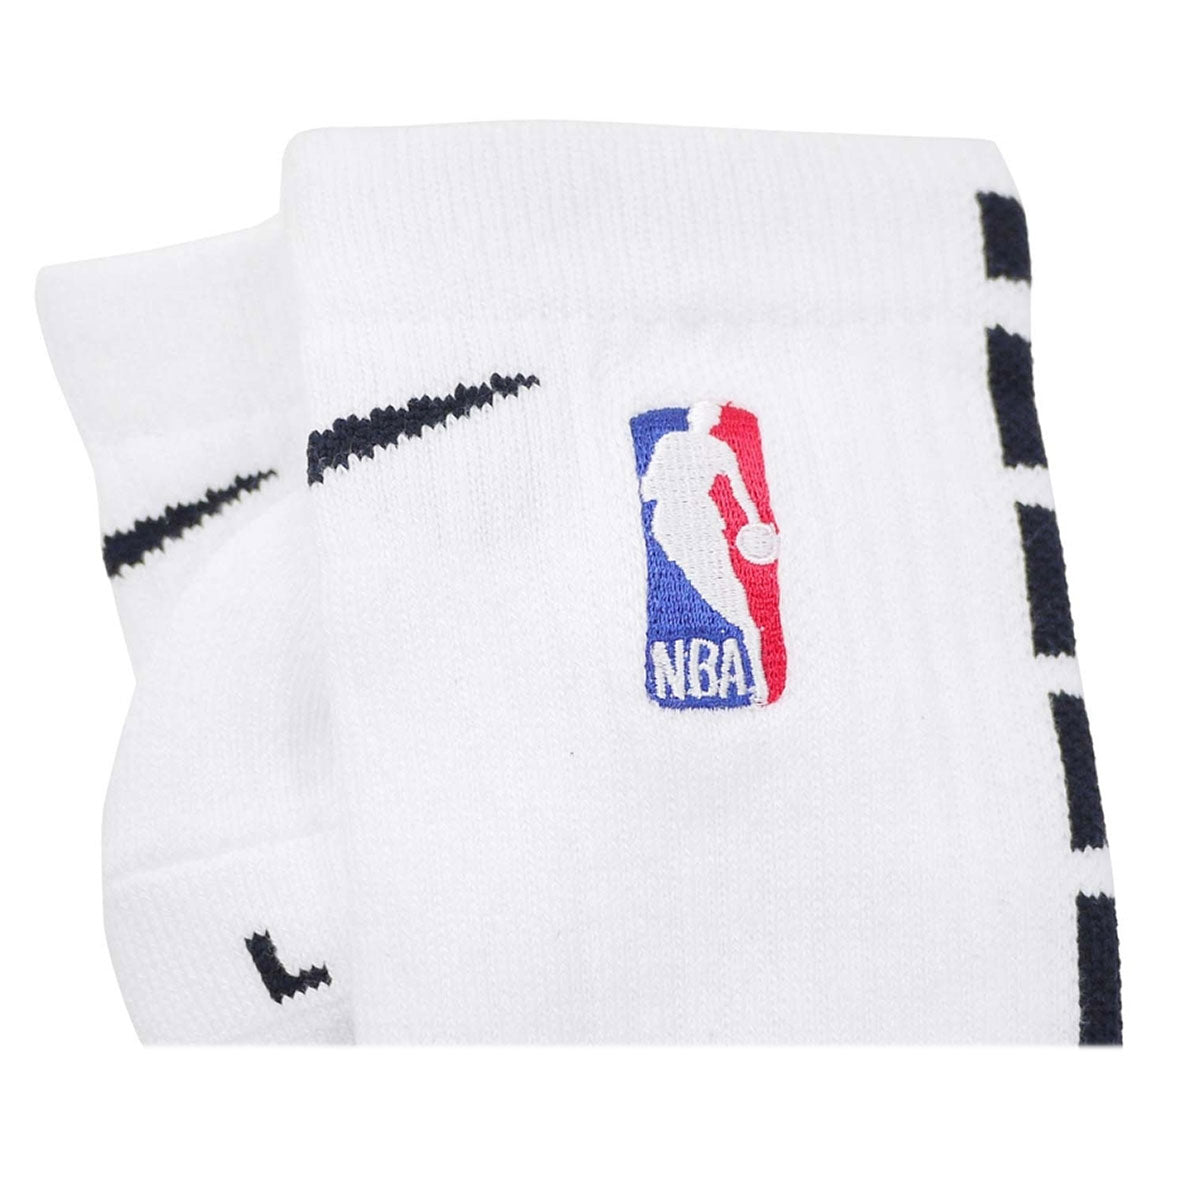 Nike NBA Elite Crew Socks - KickzStore